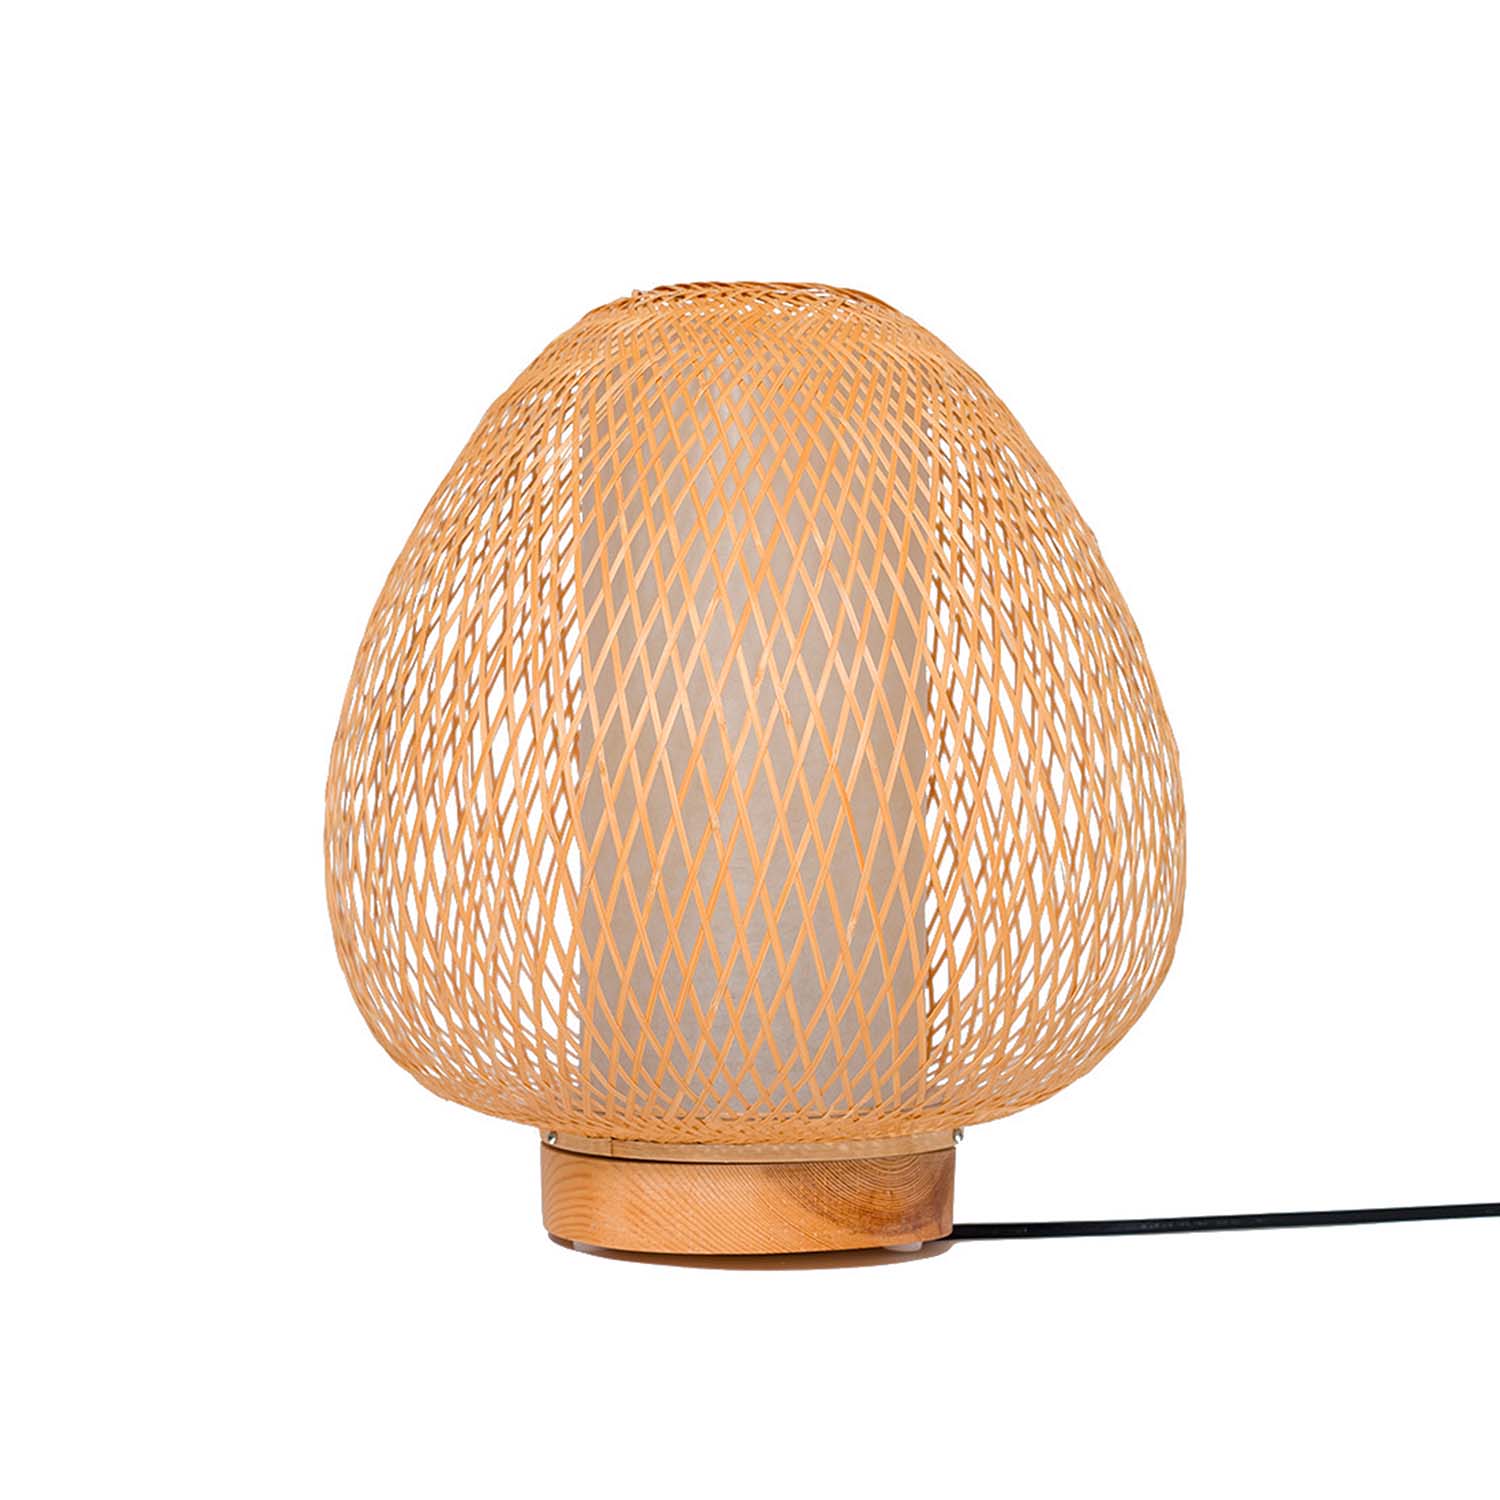 TWIGGY EGG - Woven bamboo egg-shaped bedside lamp